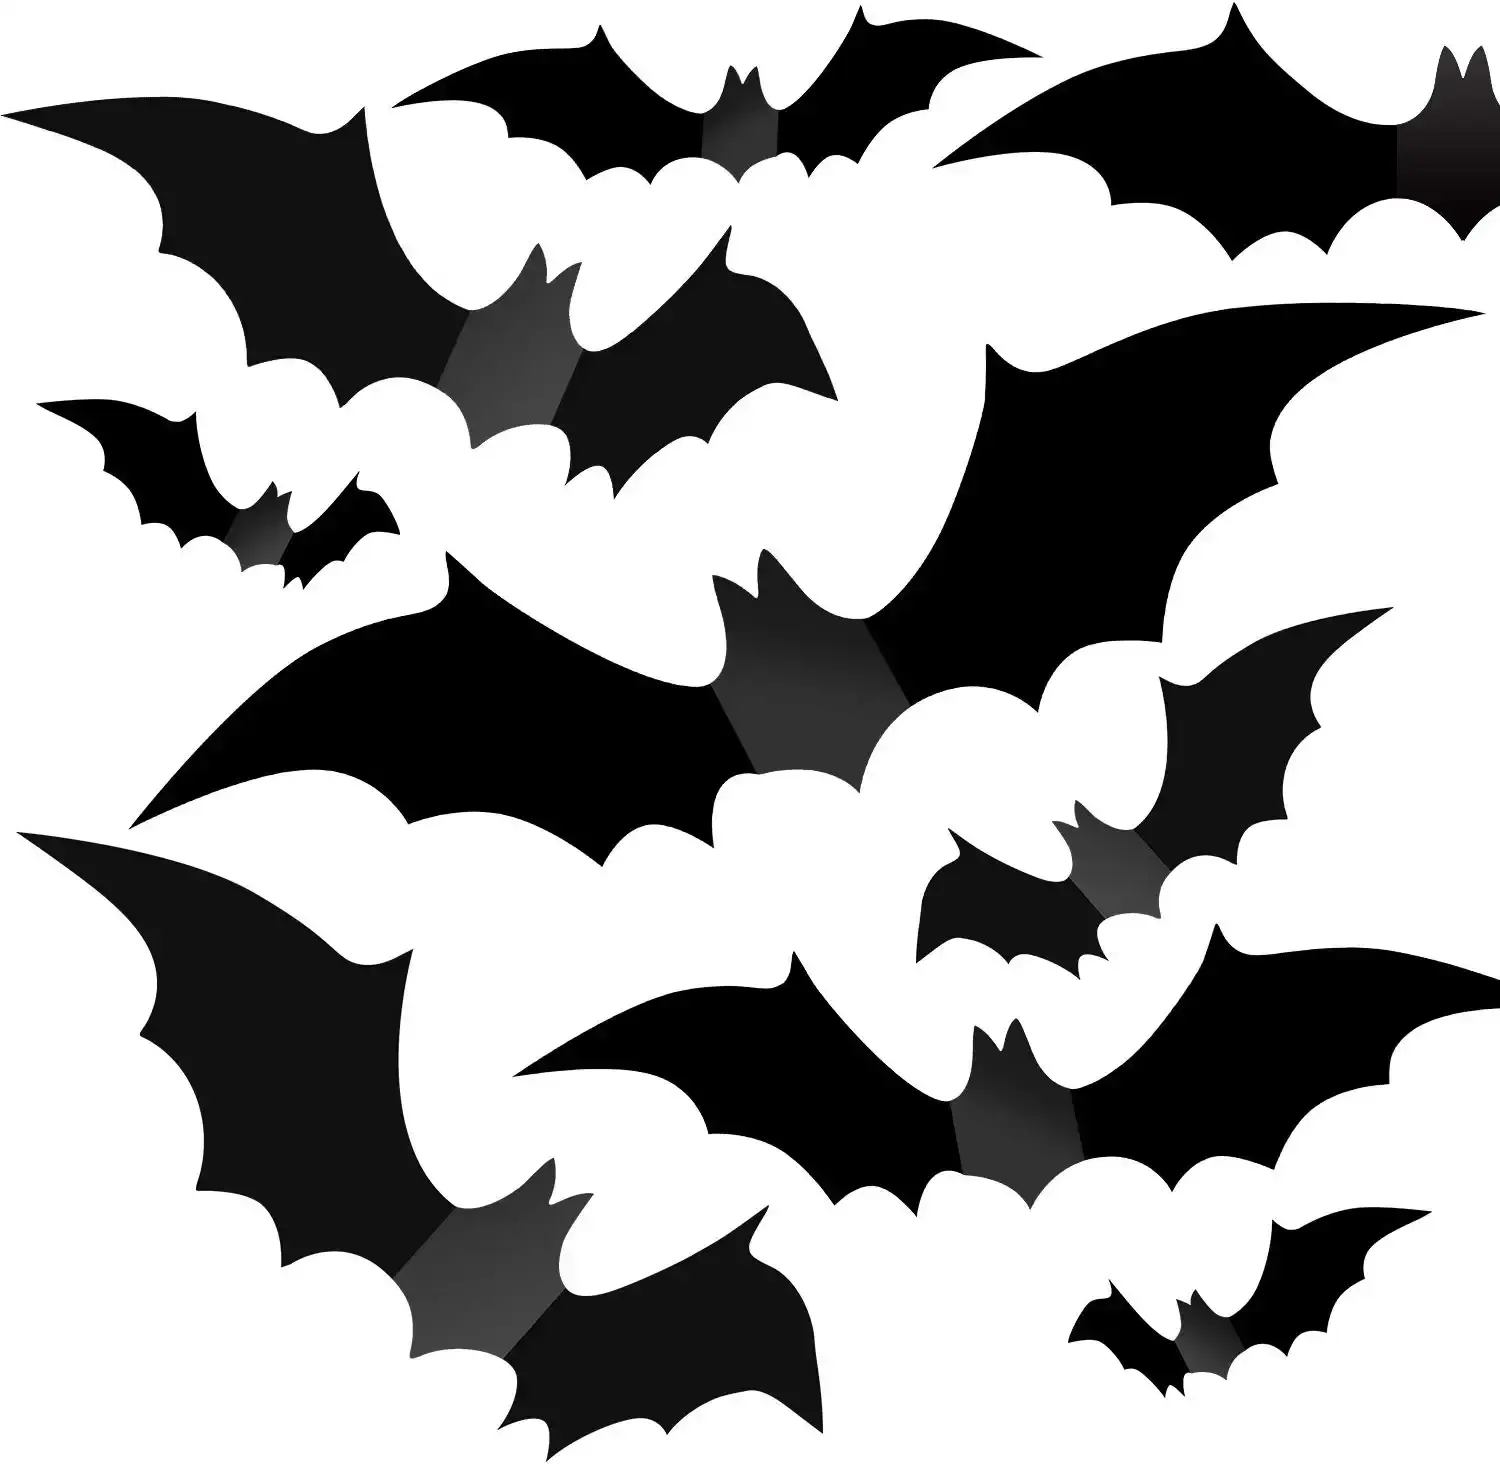 Wall decor 3d bat halloween decoration stickers for home decor 5 size waterproof spooky bats